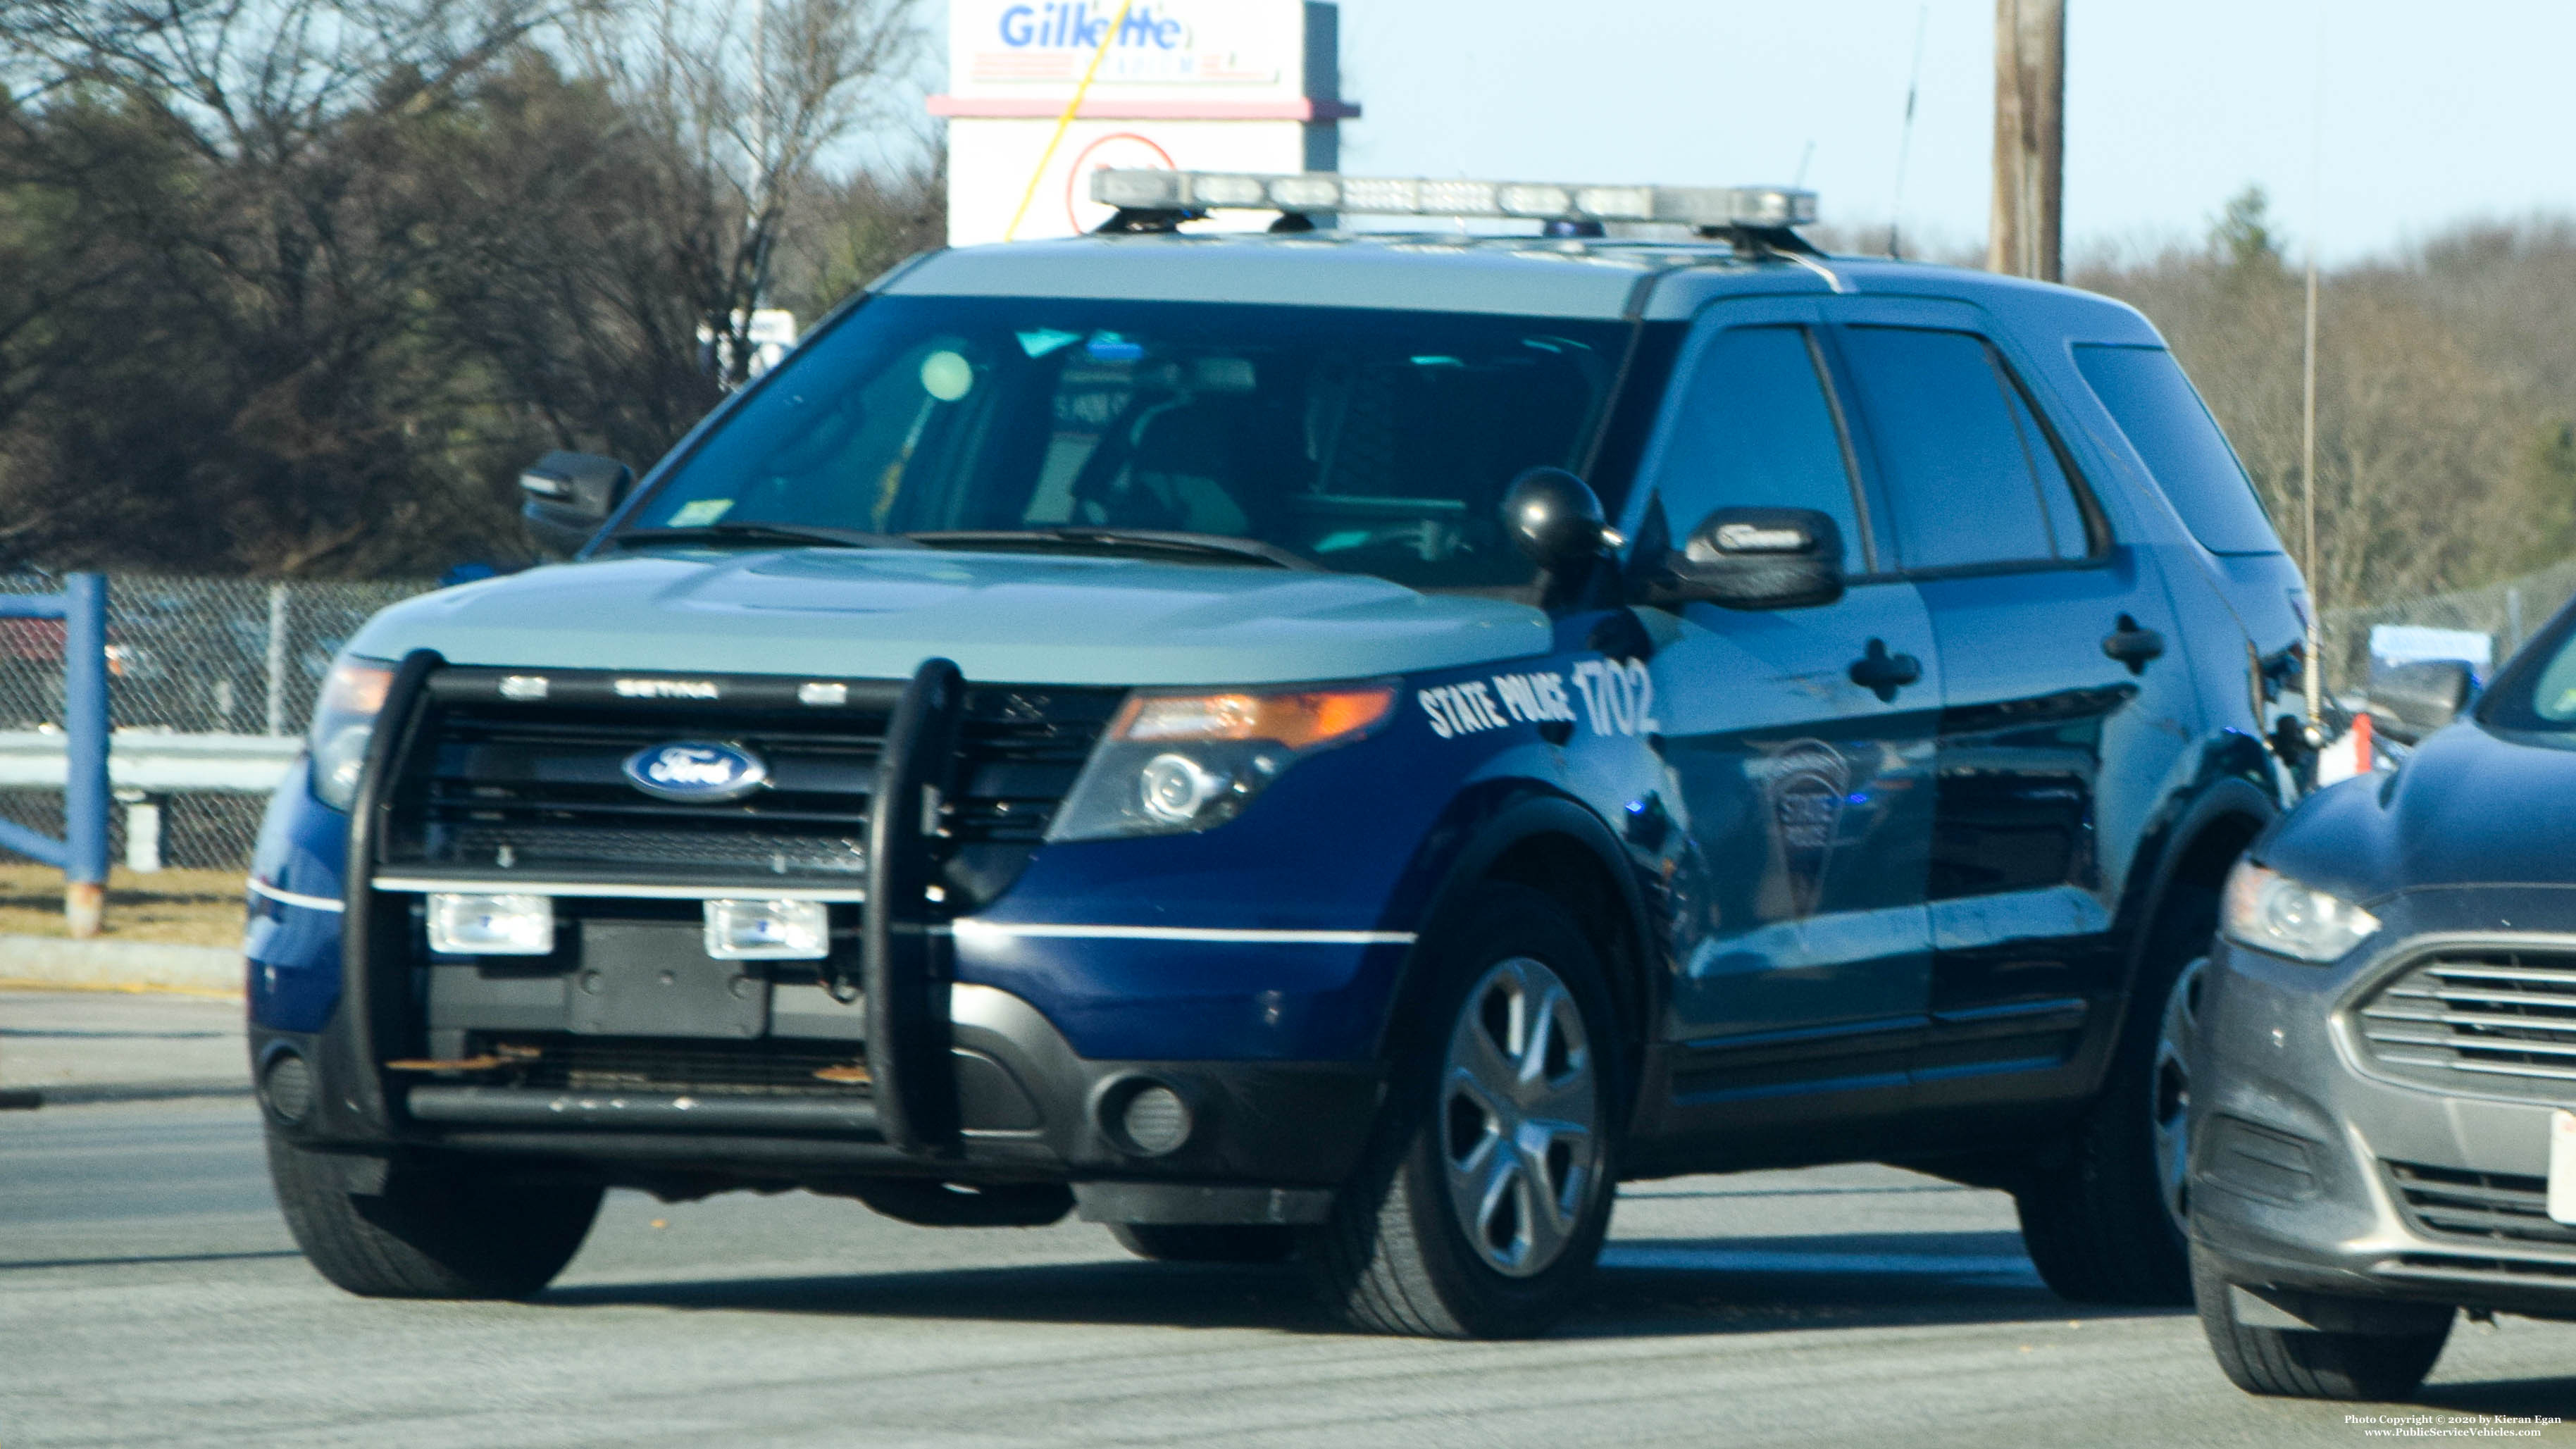 A photo  of Massachusetts State Police
            Cruiser 1702, a 2013-2014 Ford Police Interceptor Utility             taken by Kieran Egan